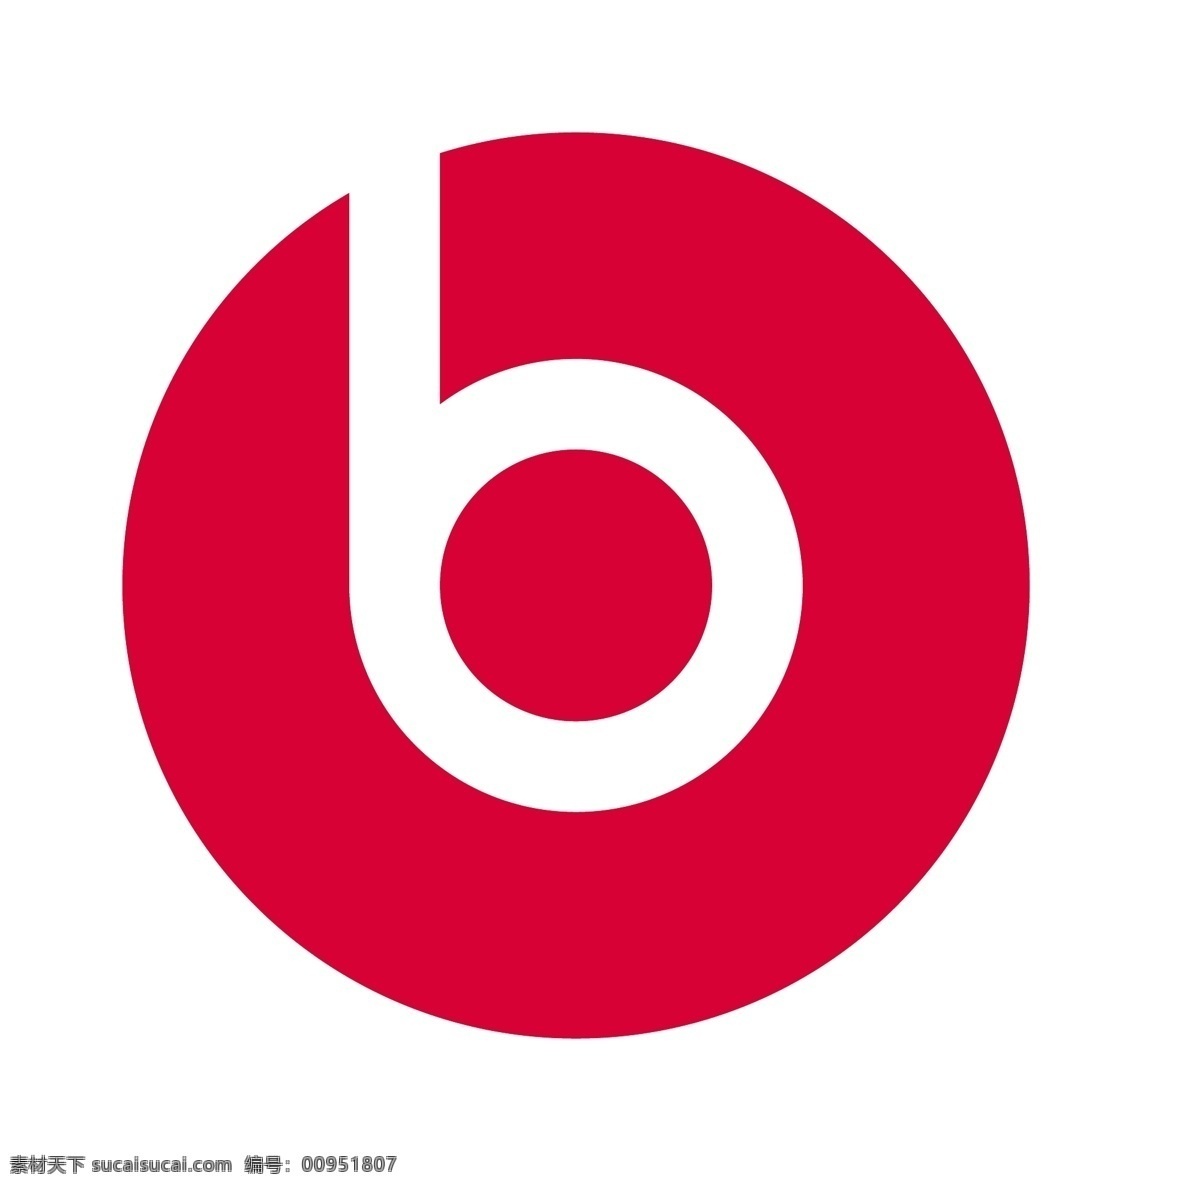 beats 耳机 logo 标志 矢量图 eps格式 品牌 矢量标志 其他矢量图